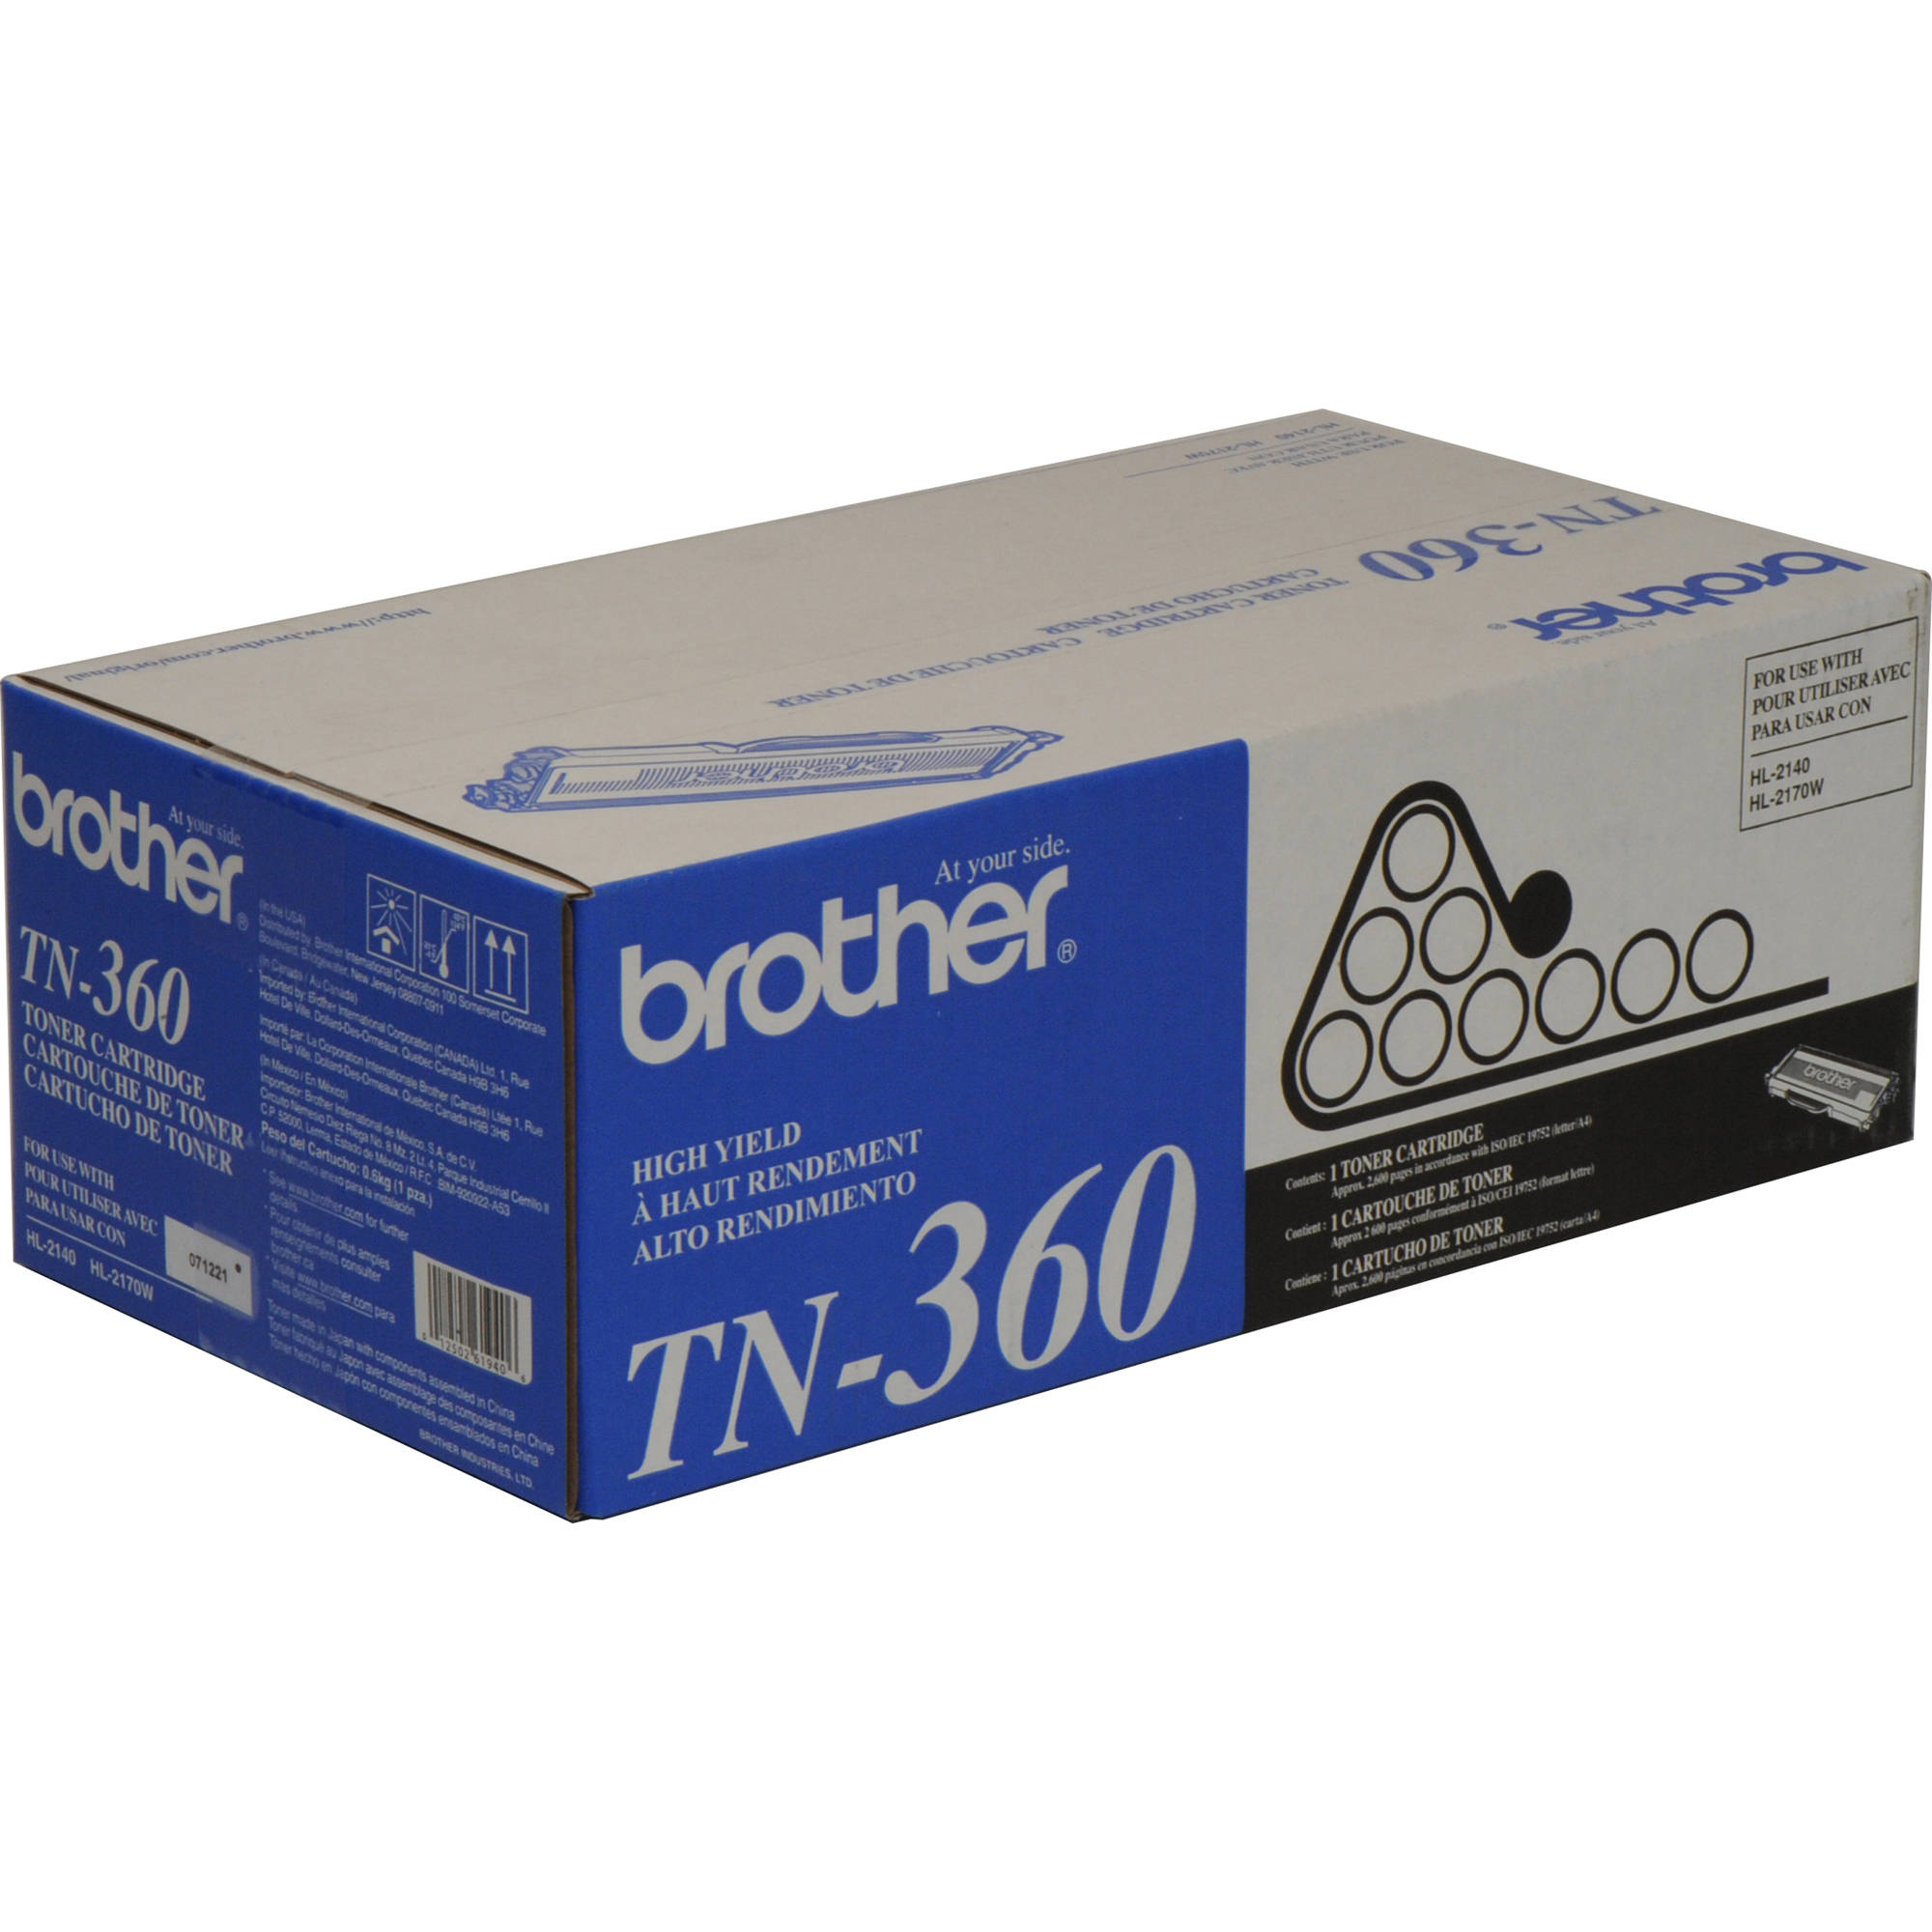 Absolute Toner Brother Genuine OEM TN360 High Yield Toner Cartridge - Black Original Brother Cartridges